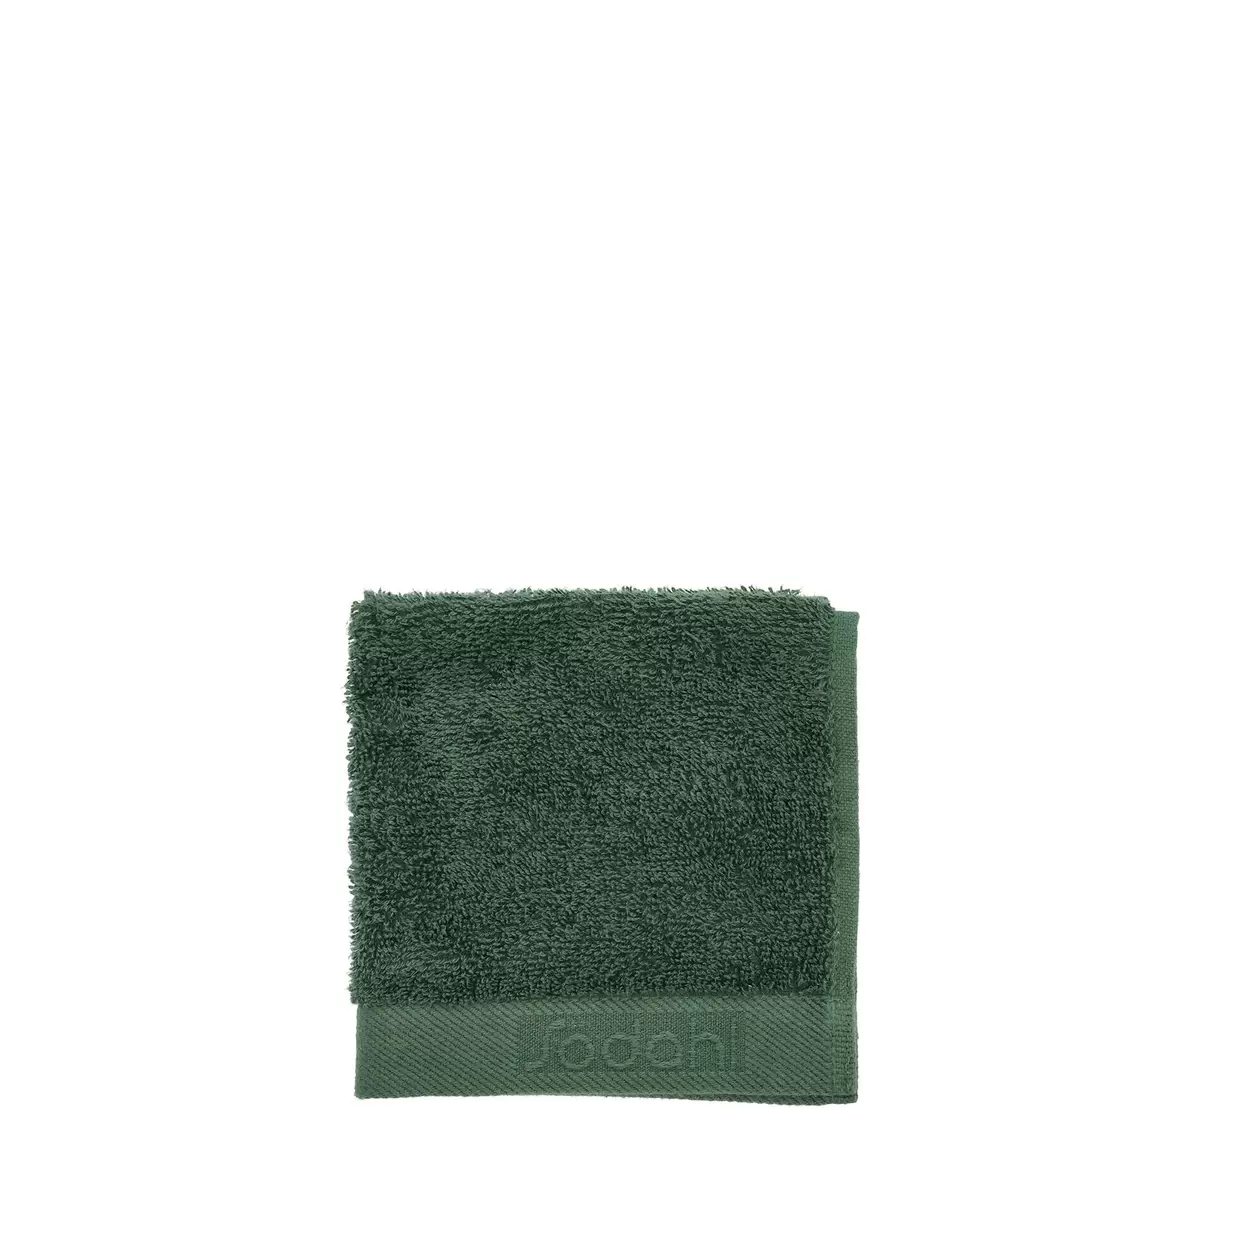 SÖDAHL Comfort vaskeklud 30x30 cm pine green på tilbud til 29,95 kr. hos Sinnerup